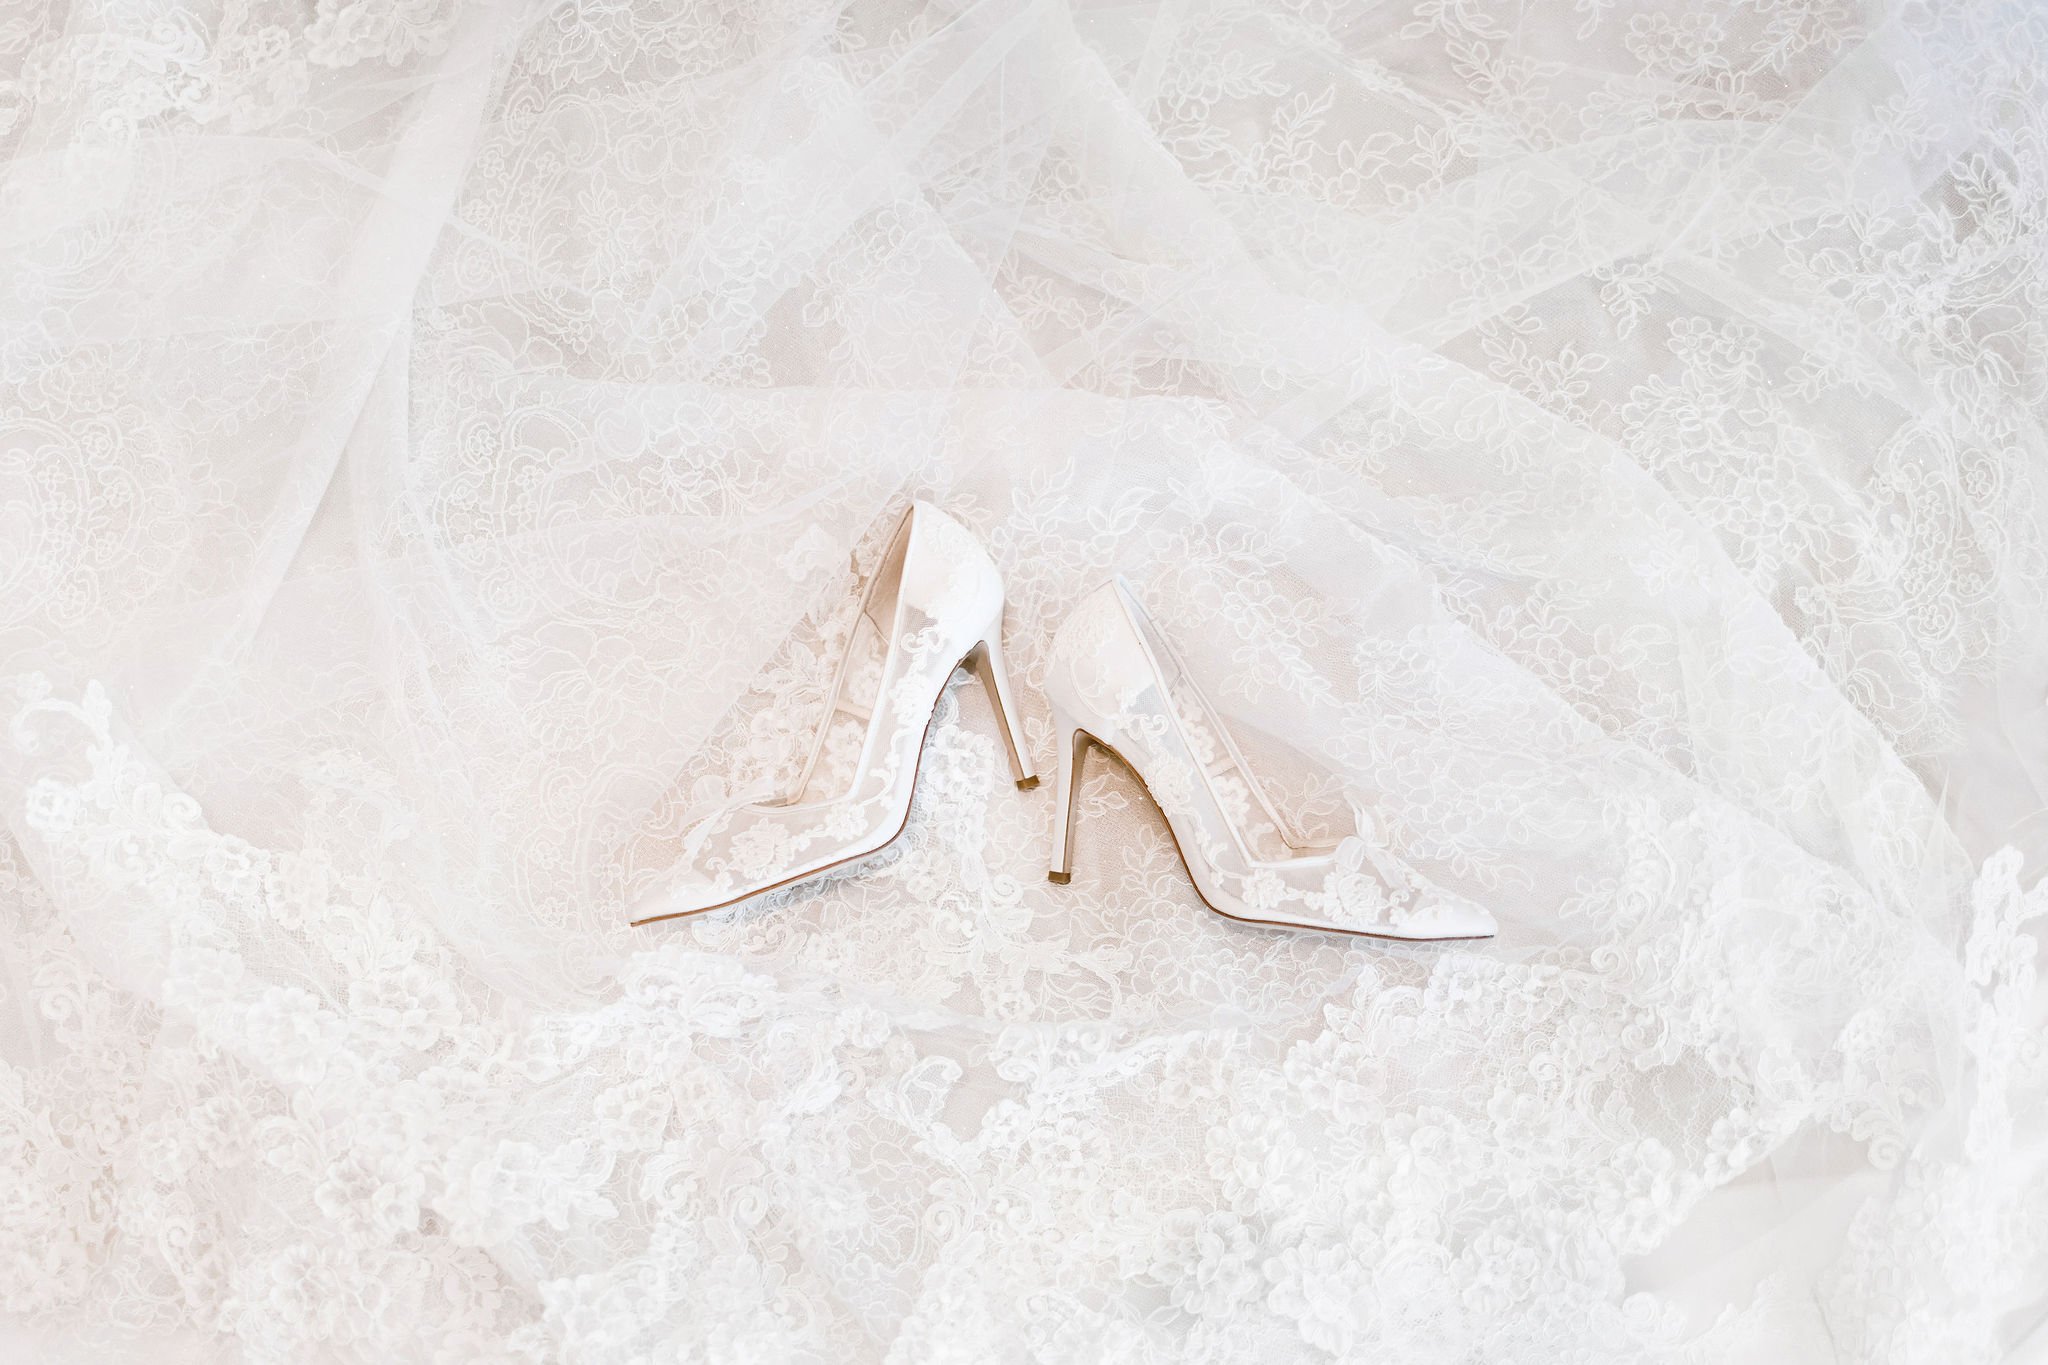 3. White Lace Wedding Toe Nail Design - wide 6